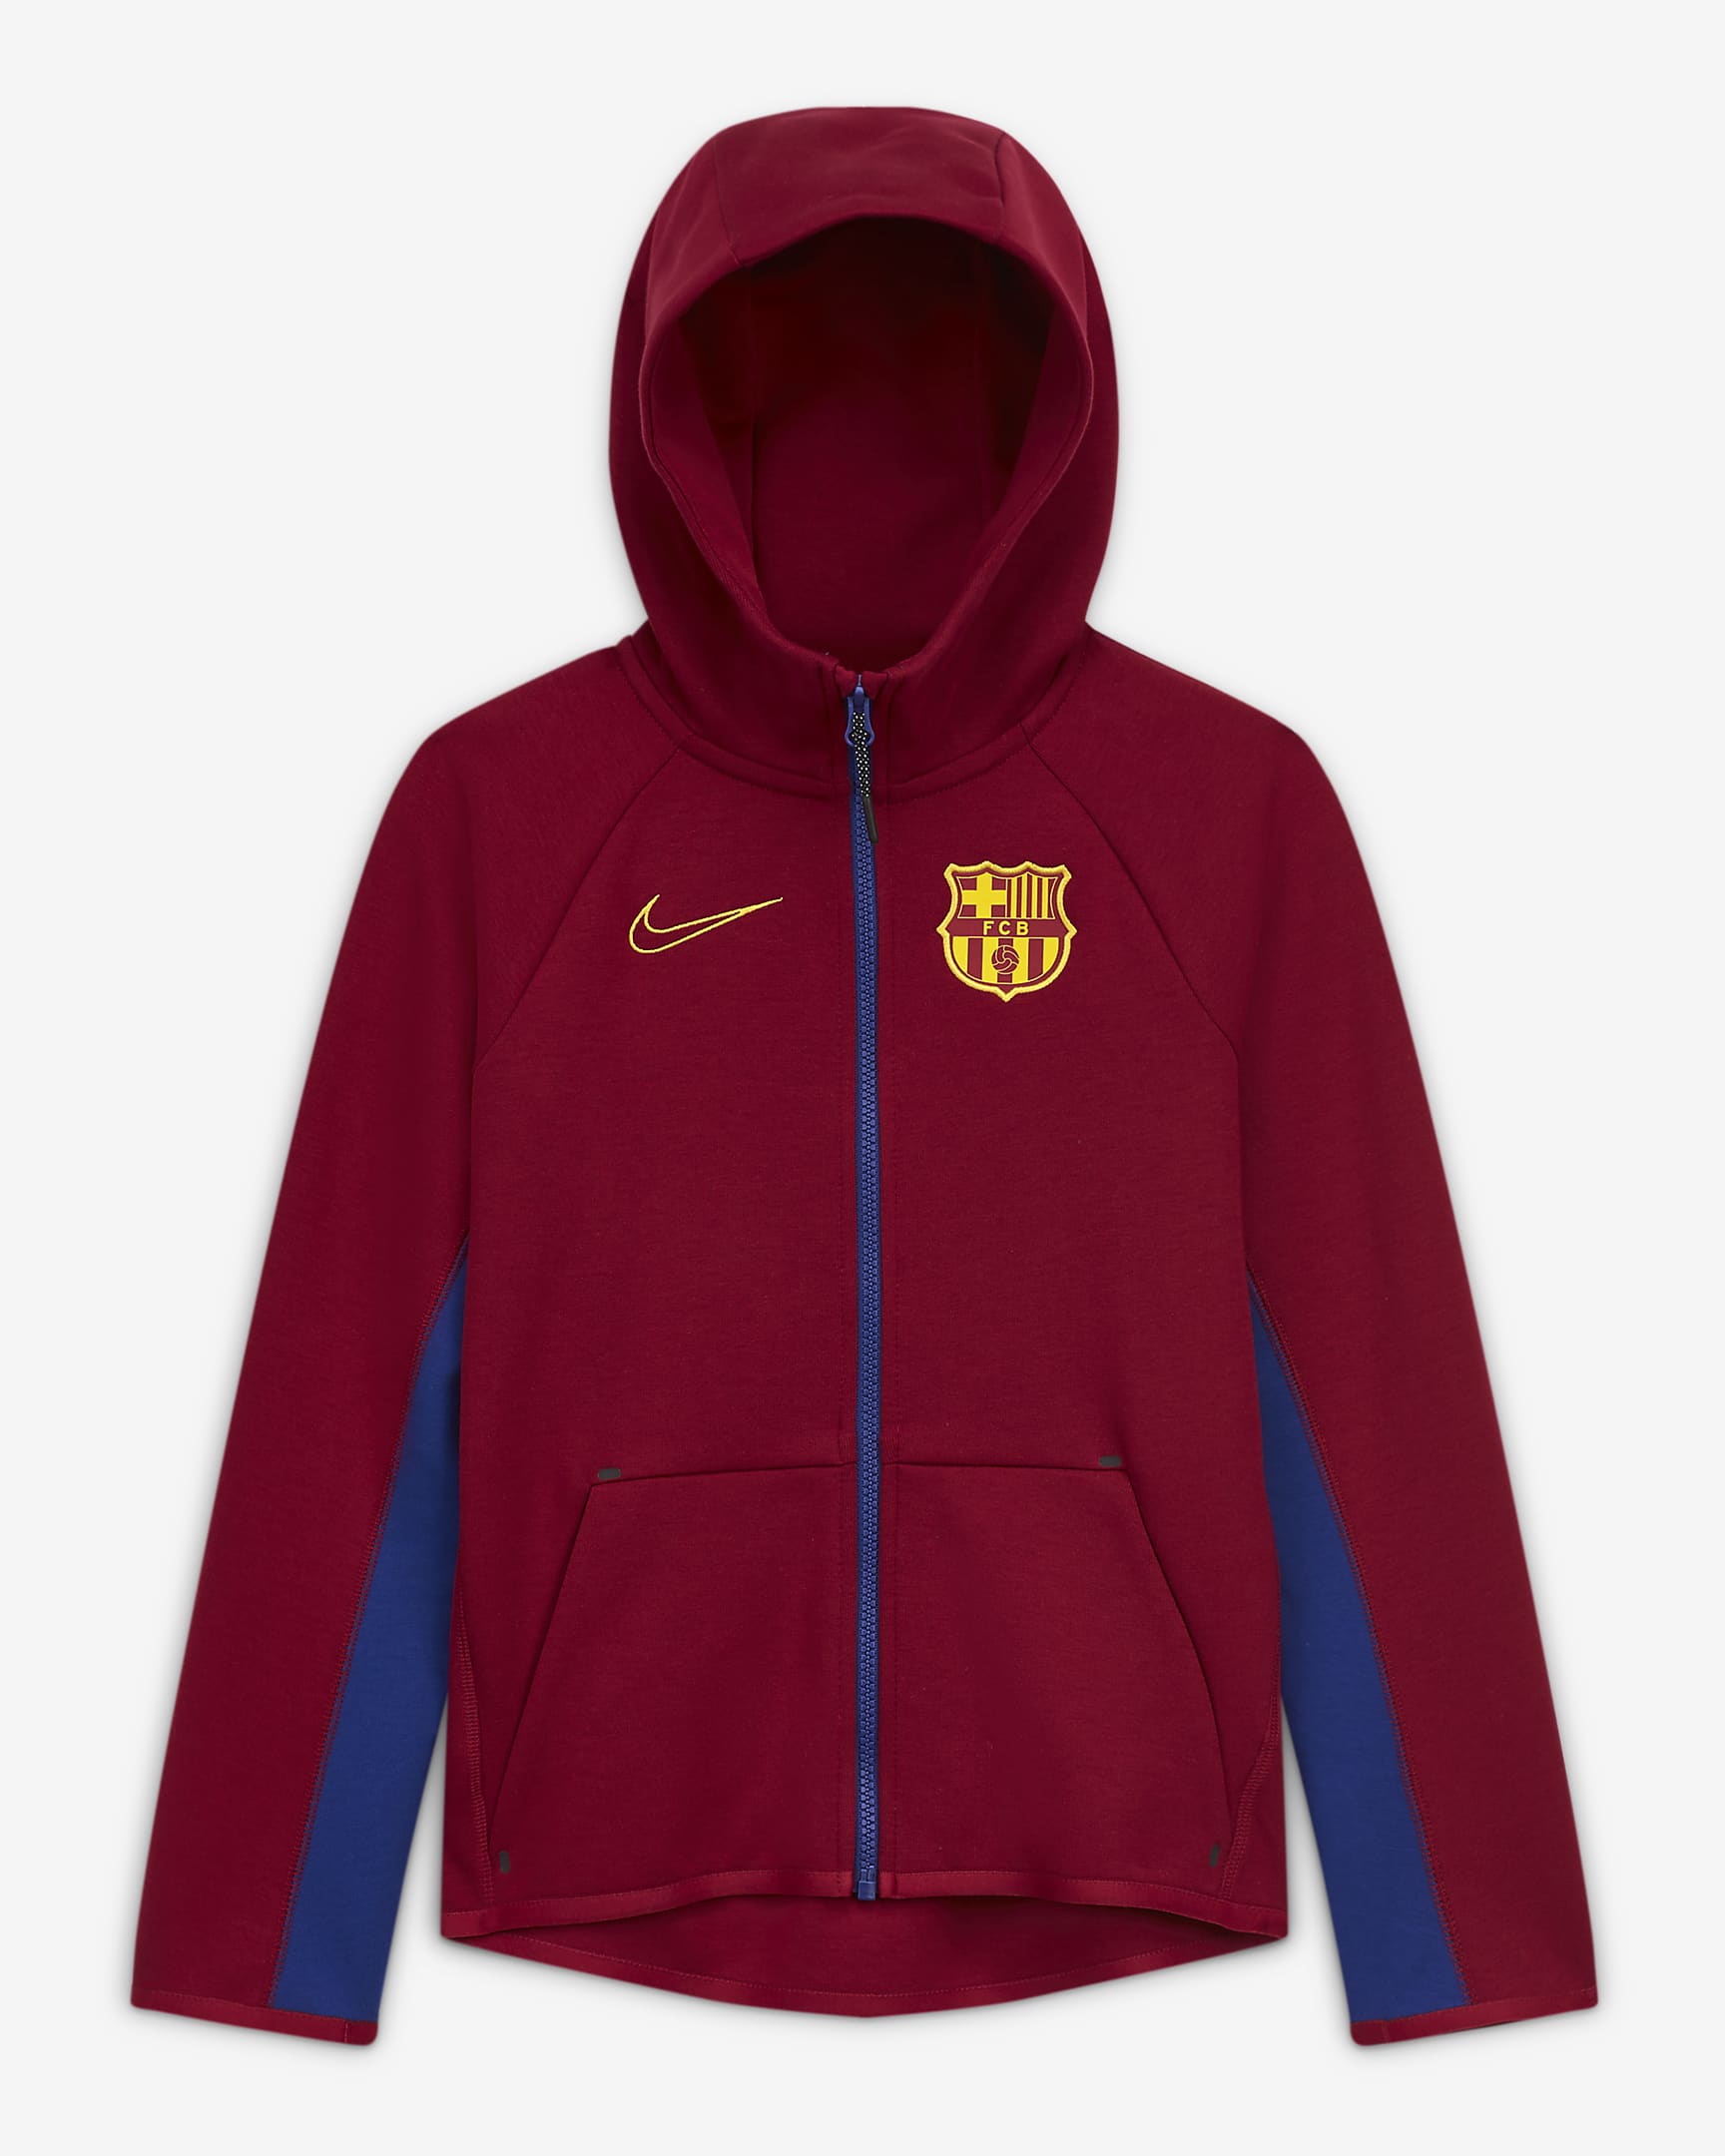 logo Uitdaging stil FC Barcelona Nike tech fleece trainingspak 2020-2021 - Voetbalshirts.com